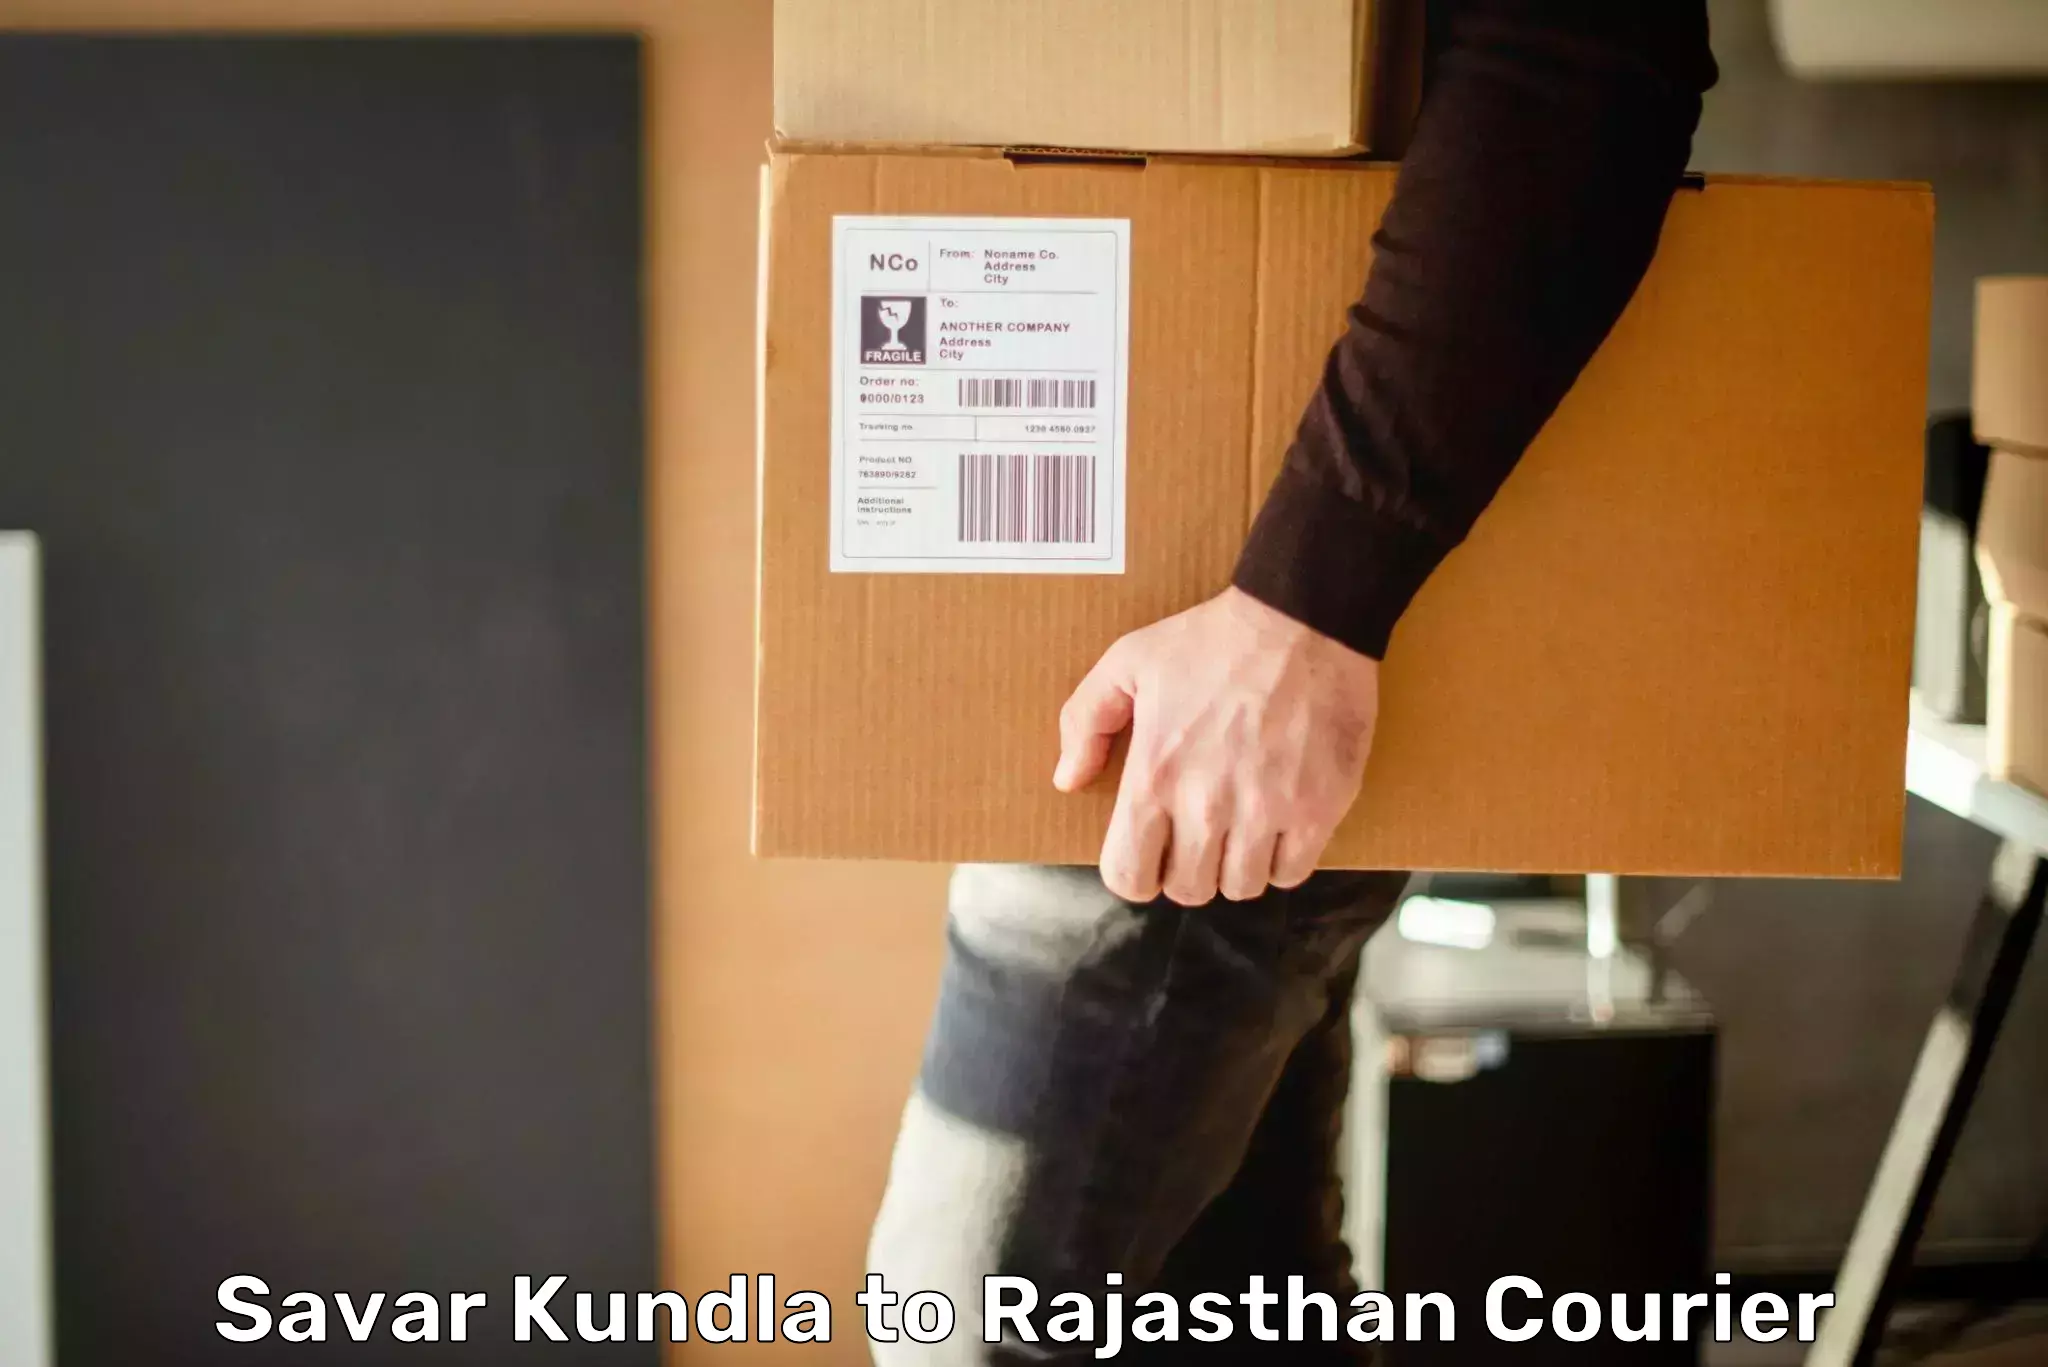 Express courier capabilities Savar Kundla to Malsisar